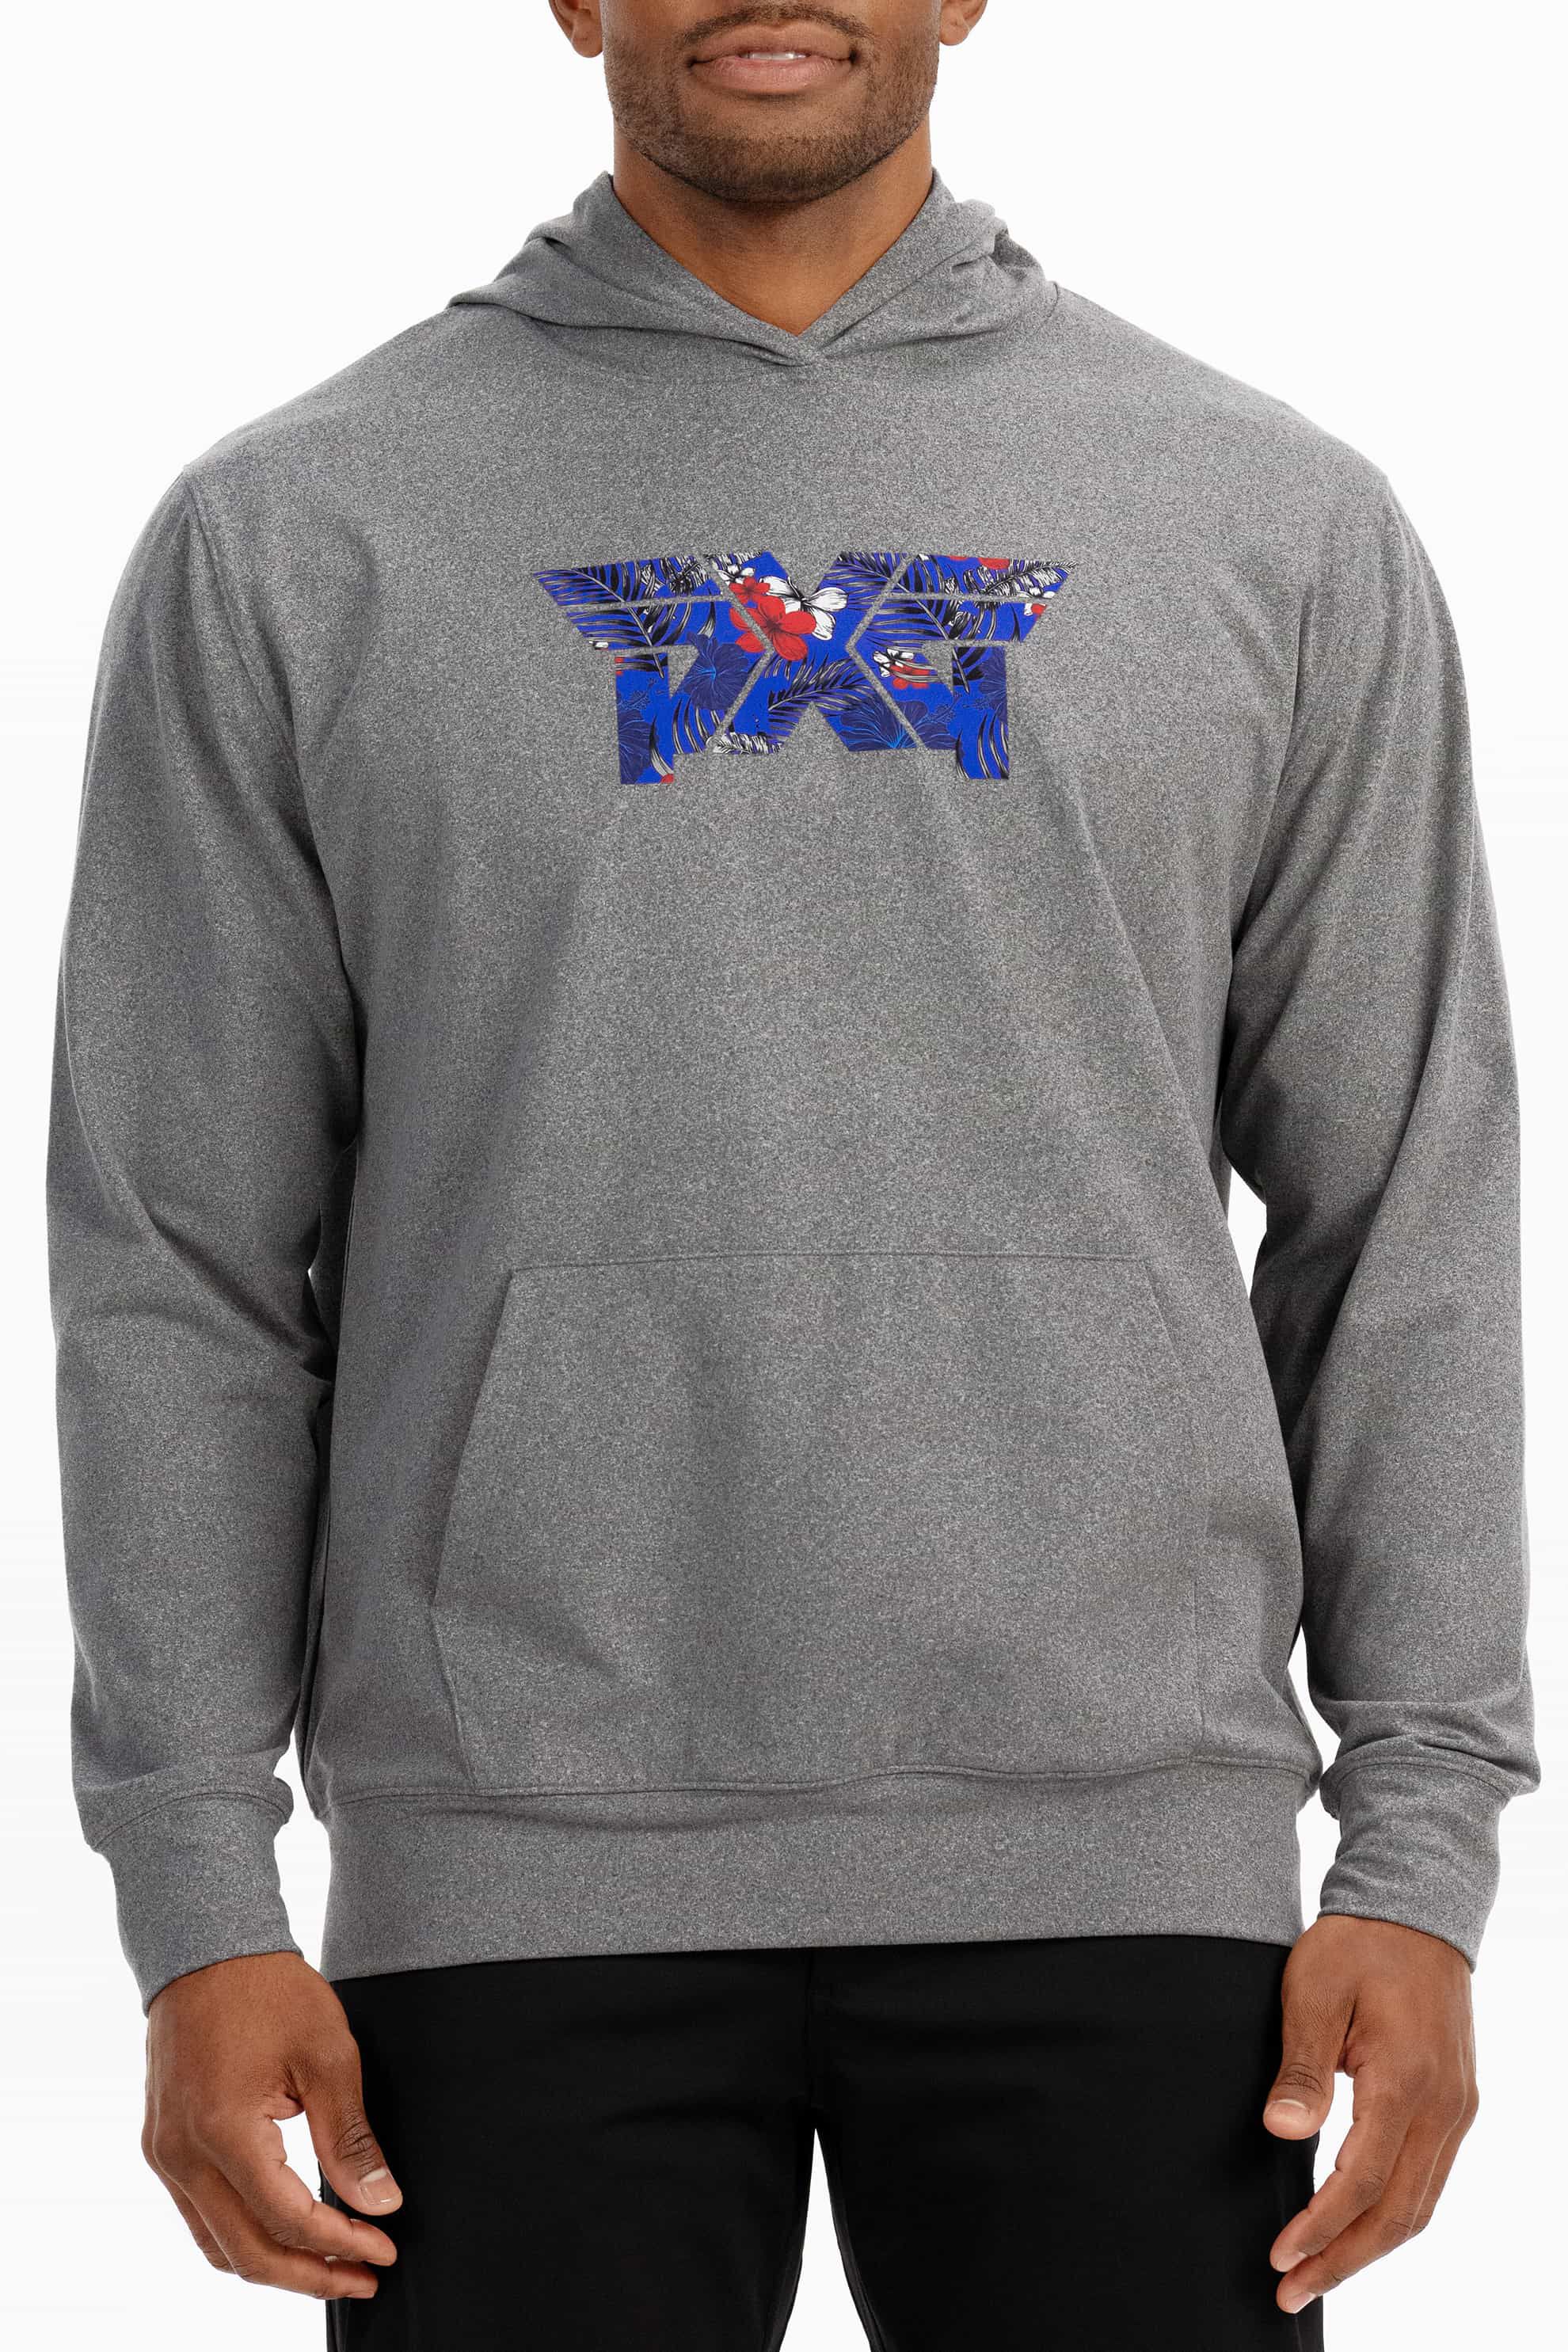 Shop Men's Golf Sweaters, Sweatshirts and Hoodies | PXG JP